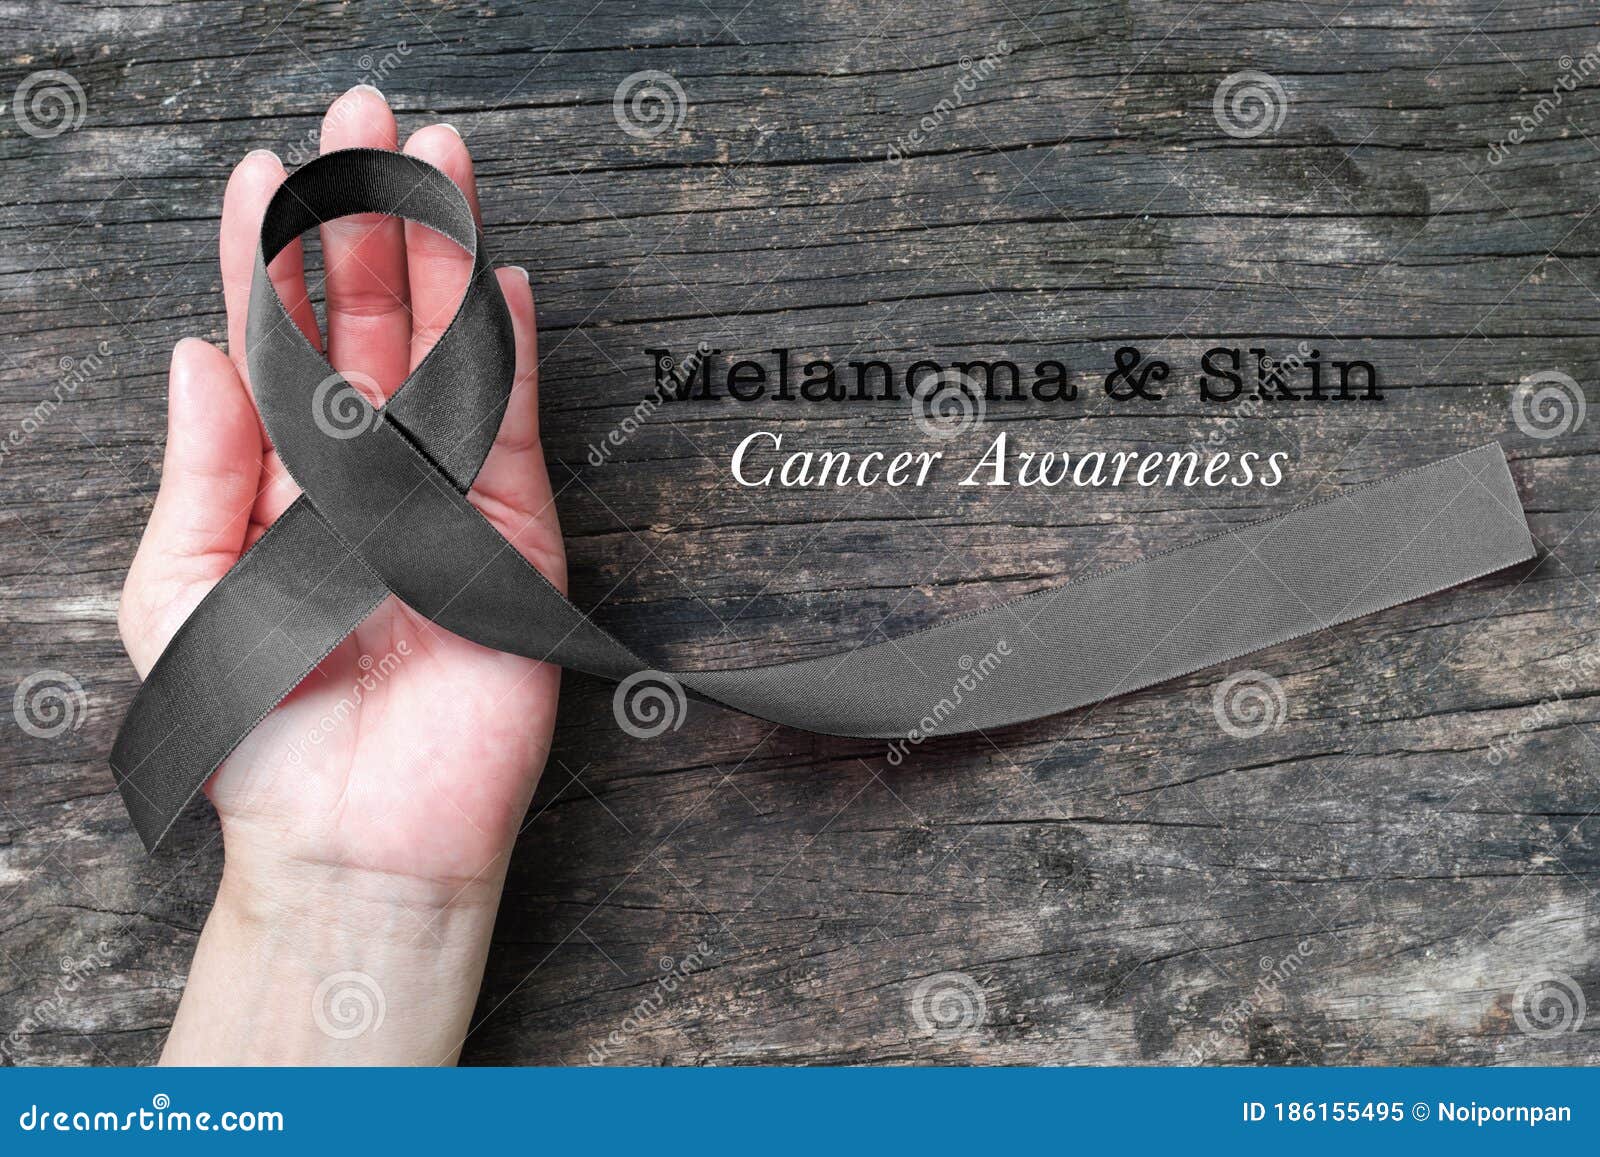 melanoma and skin cancer black awareness ribbon on human helping hand old aged background